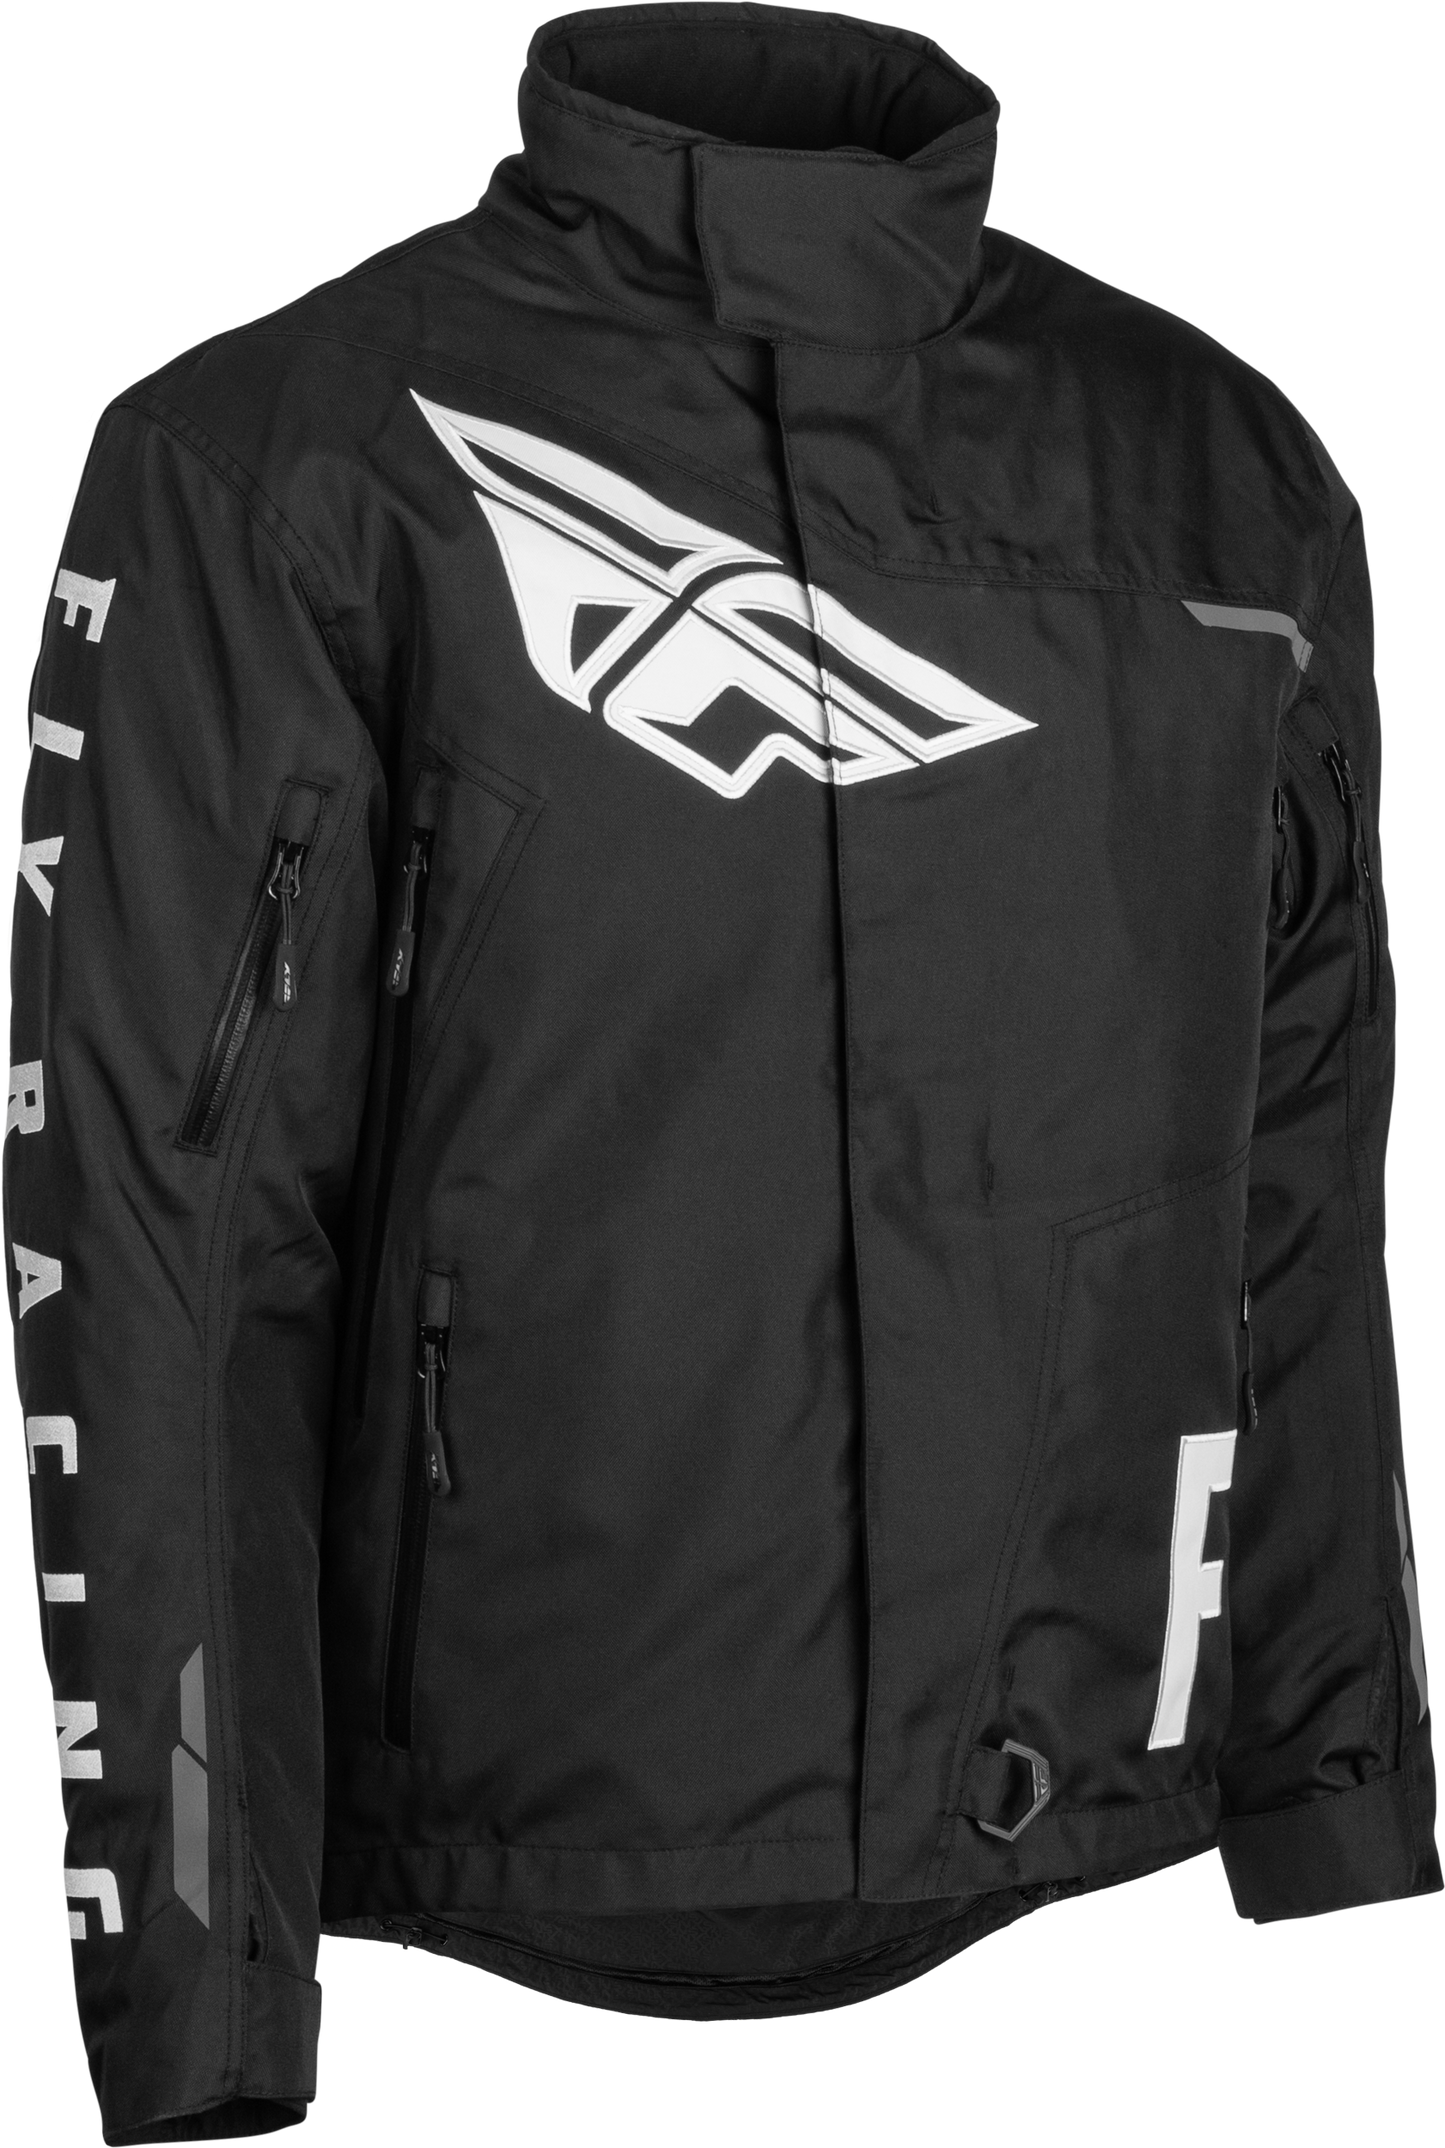 FLY RACING Snx Pro Jacket Black Xl 470-4115X